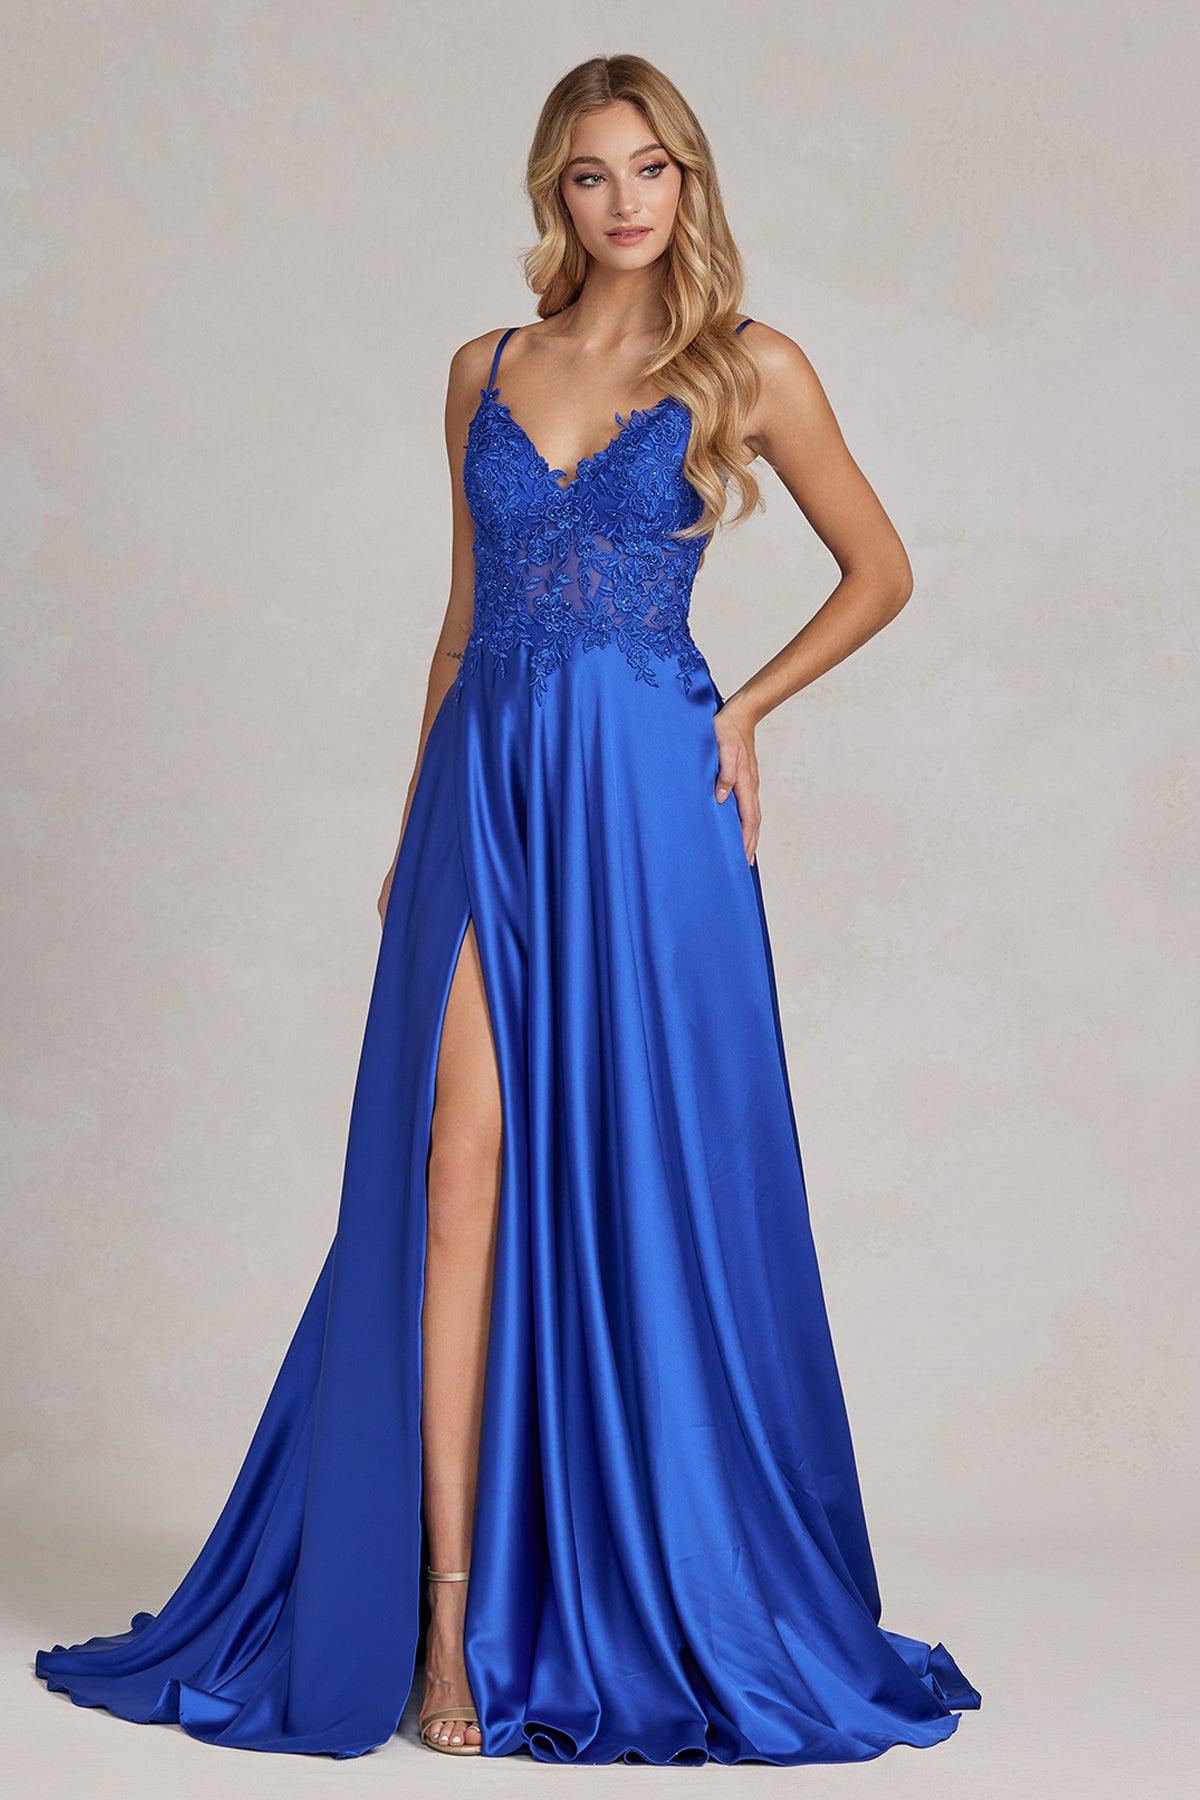 Nox Anabel K1121 Prom Long Sexy Slit Formal Dress Royal Blue